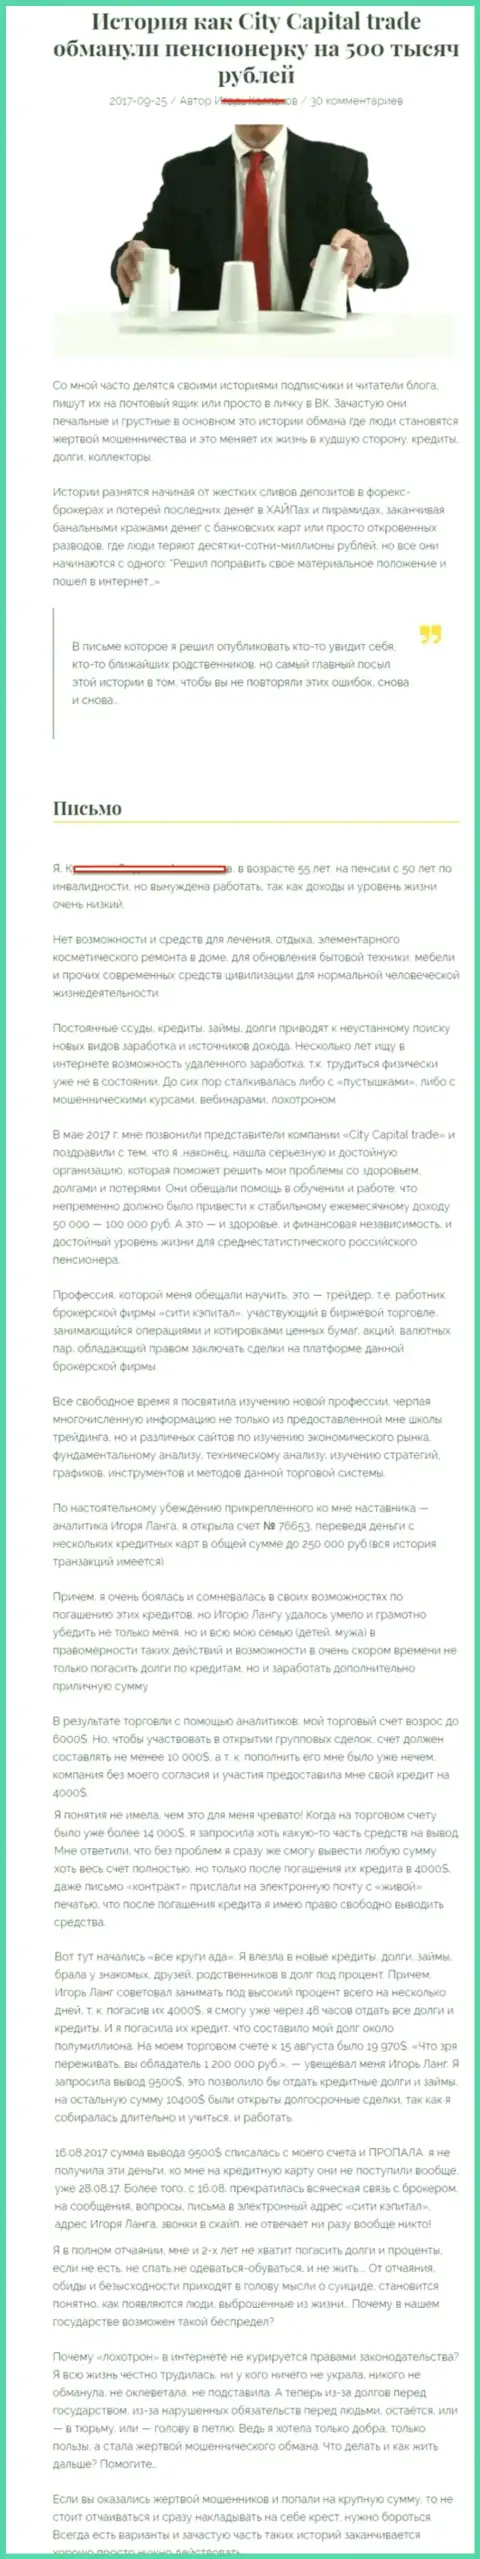 СитиКапитал Трейд обули клиентку пенсионного возраста - инвалида на общую сумму 500000 рублей - МОШЕННИКИ !!!